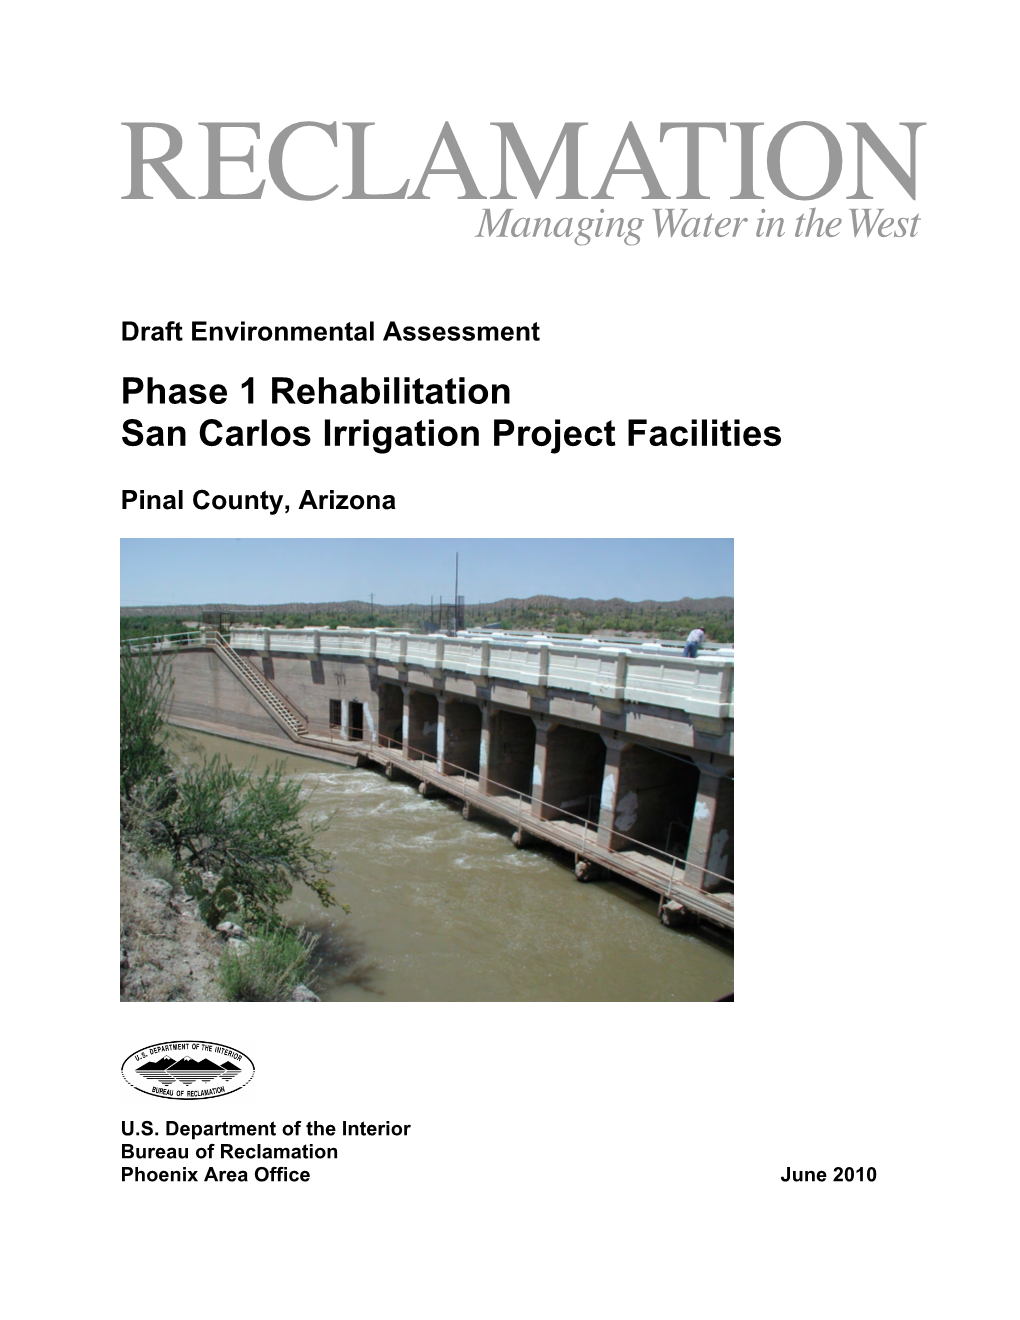 Phase 1 Rehabilitation San Carlos Irrigation Project Facilities